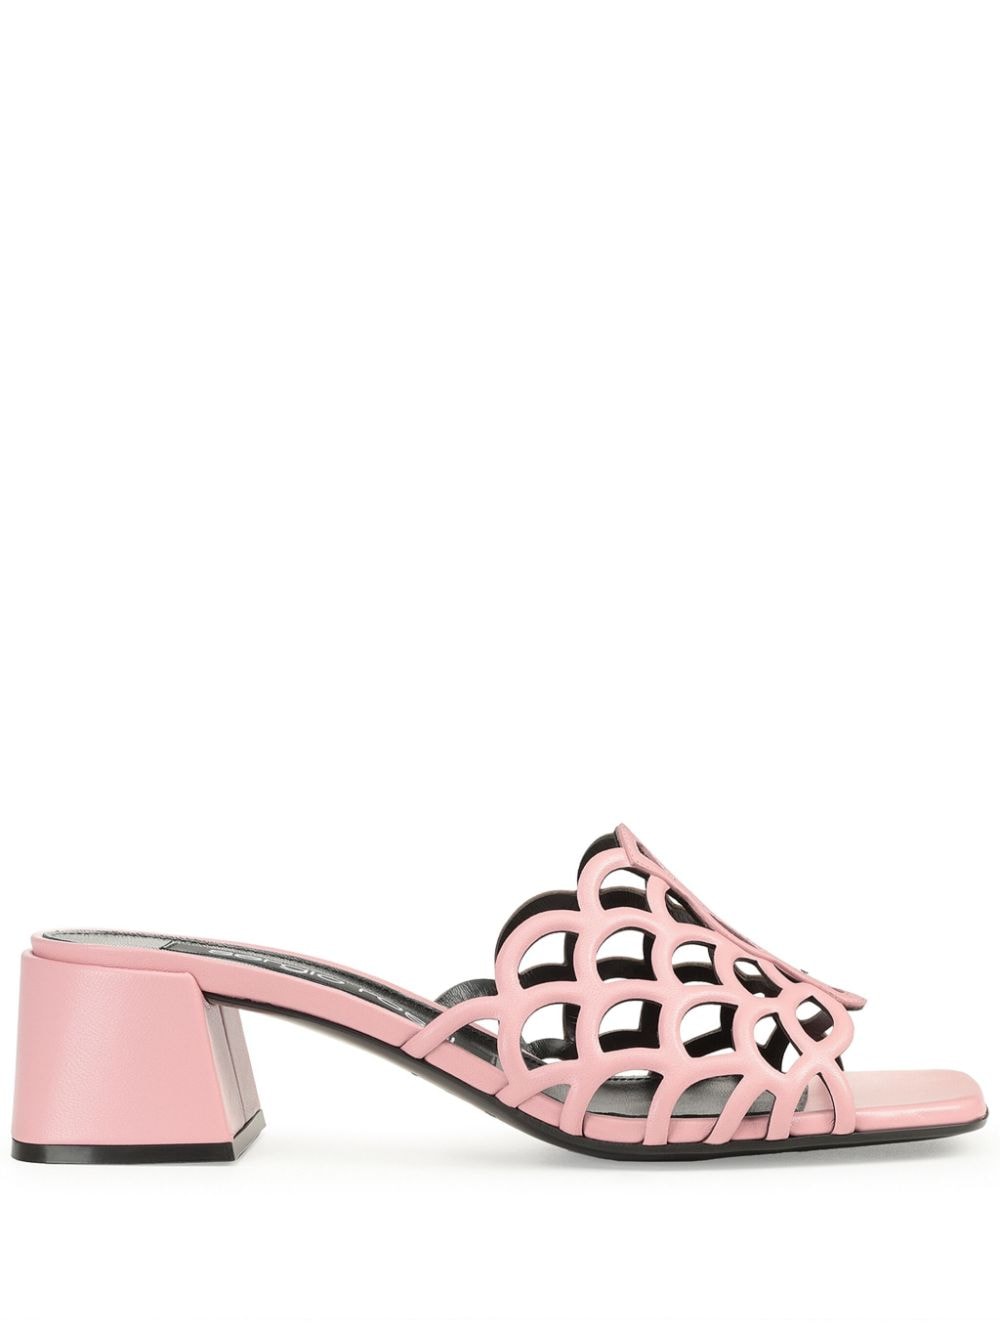 Sergio Rossi Mermaid 45mm leather sandals - Pink von Sergio Rossi